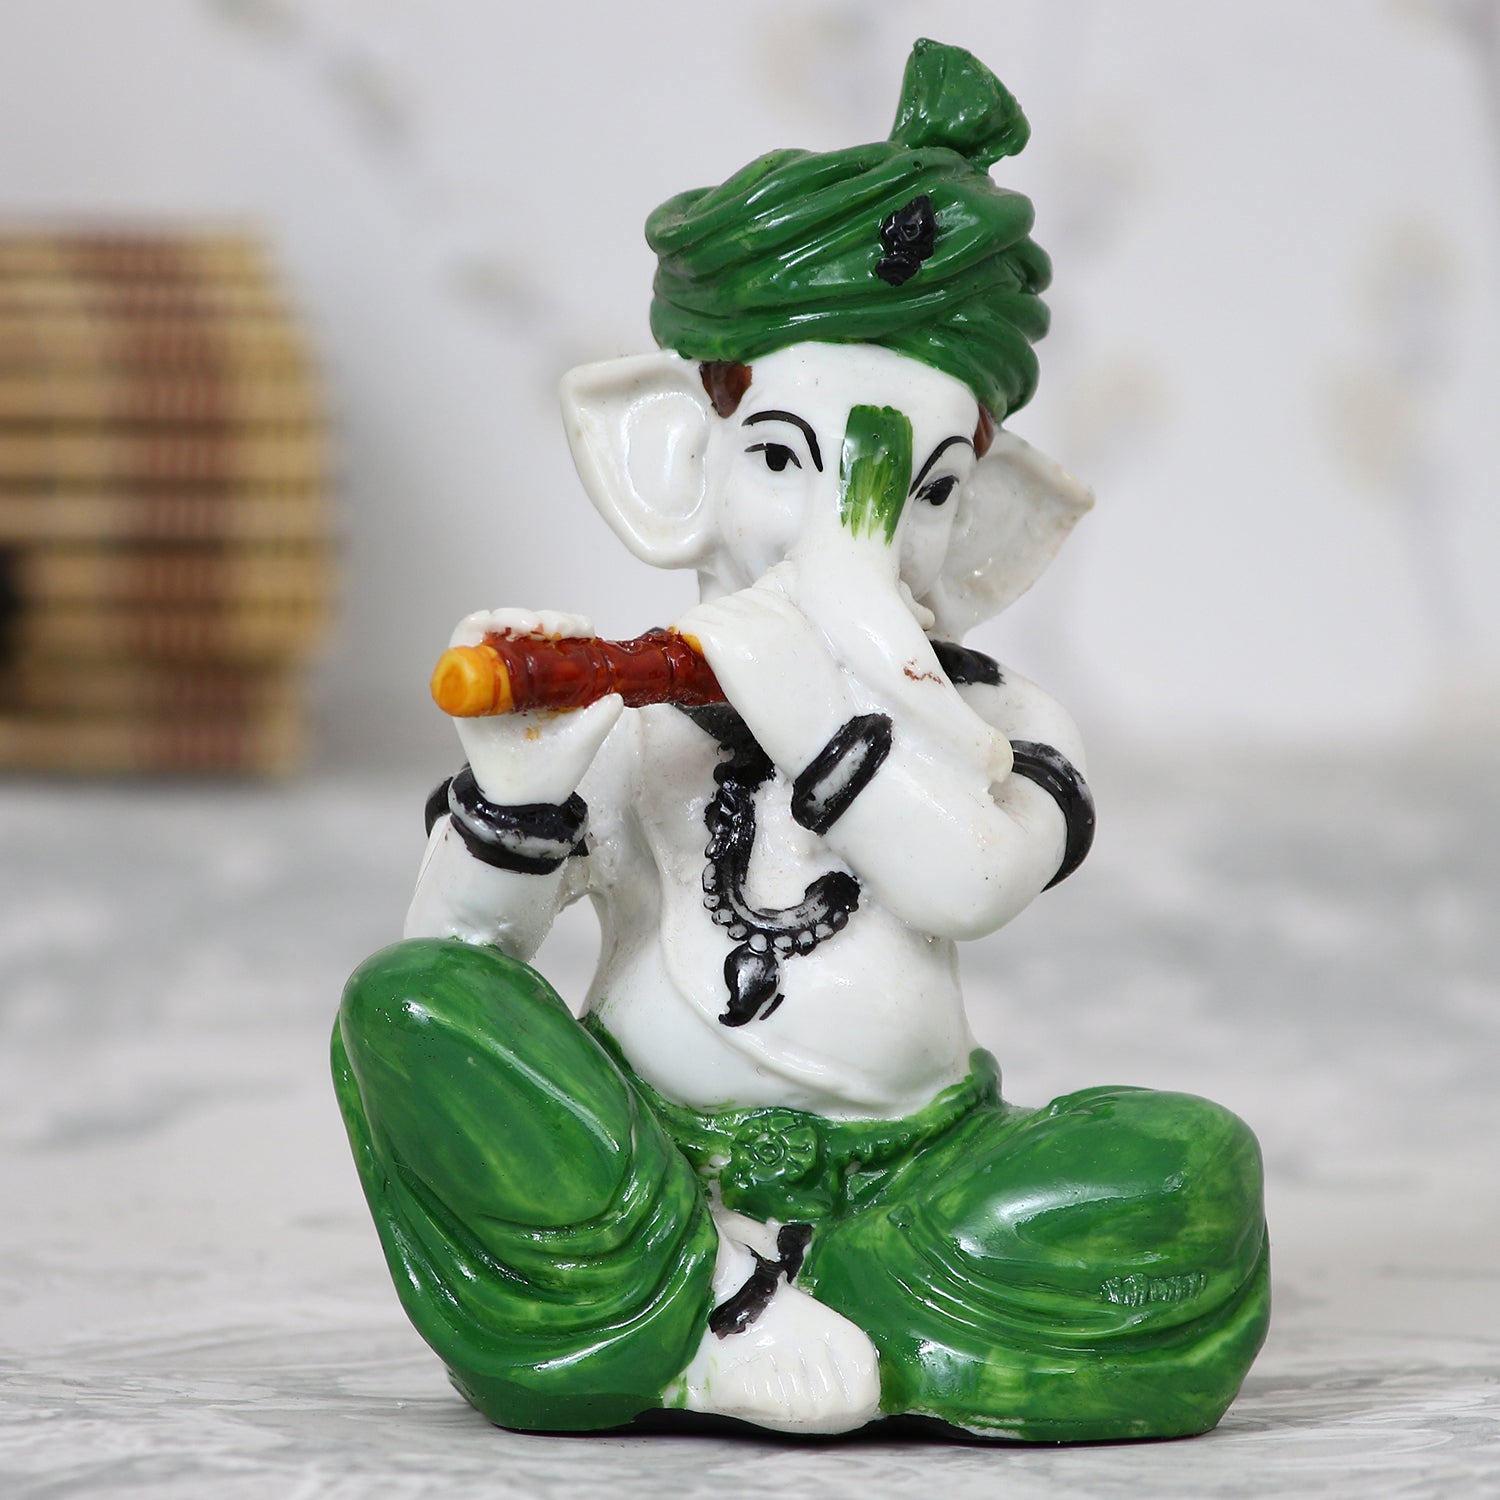 Lord Ganesha playing Flute